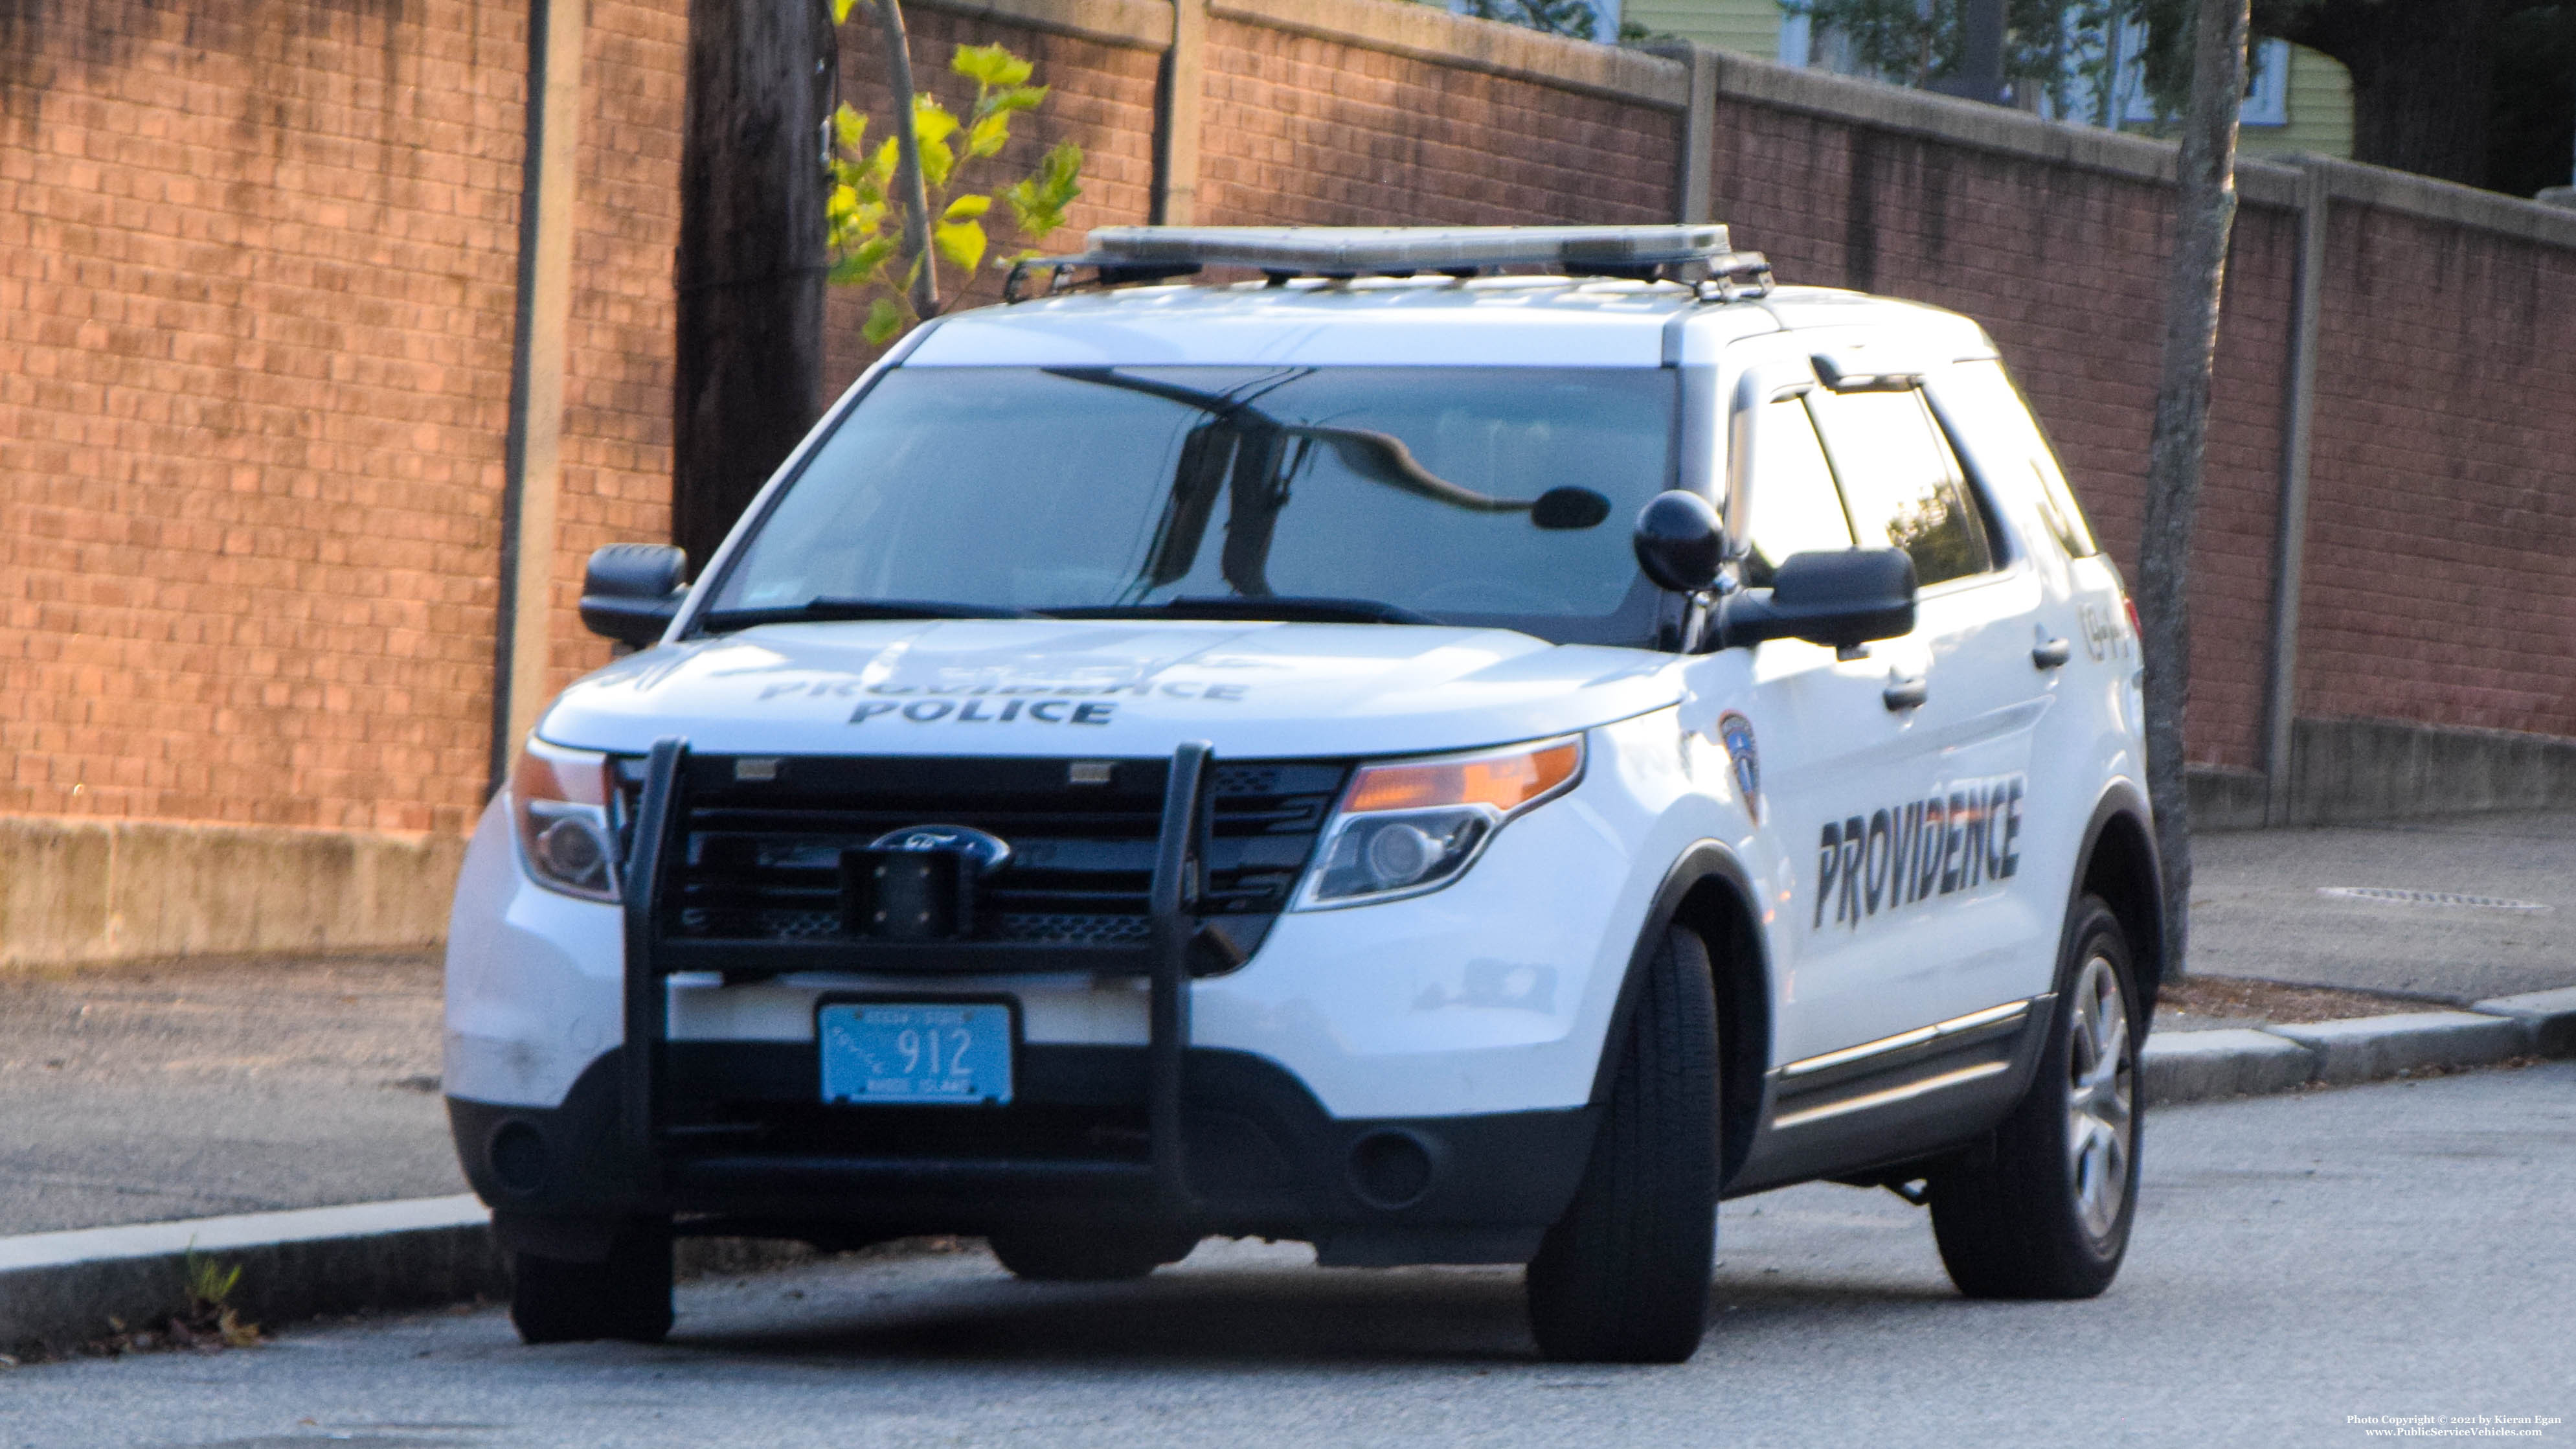 A photo  of Providence Police
            Cruiser 912, a 2015 Ford Police Interceptor Utility             taken by Kieran Egan